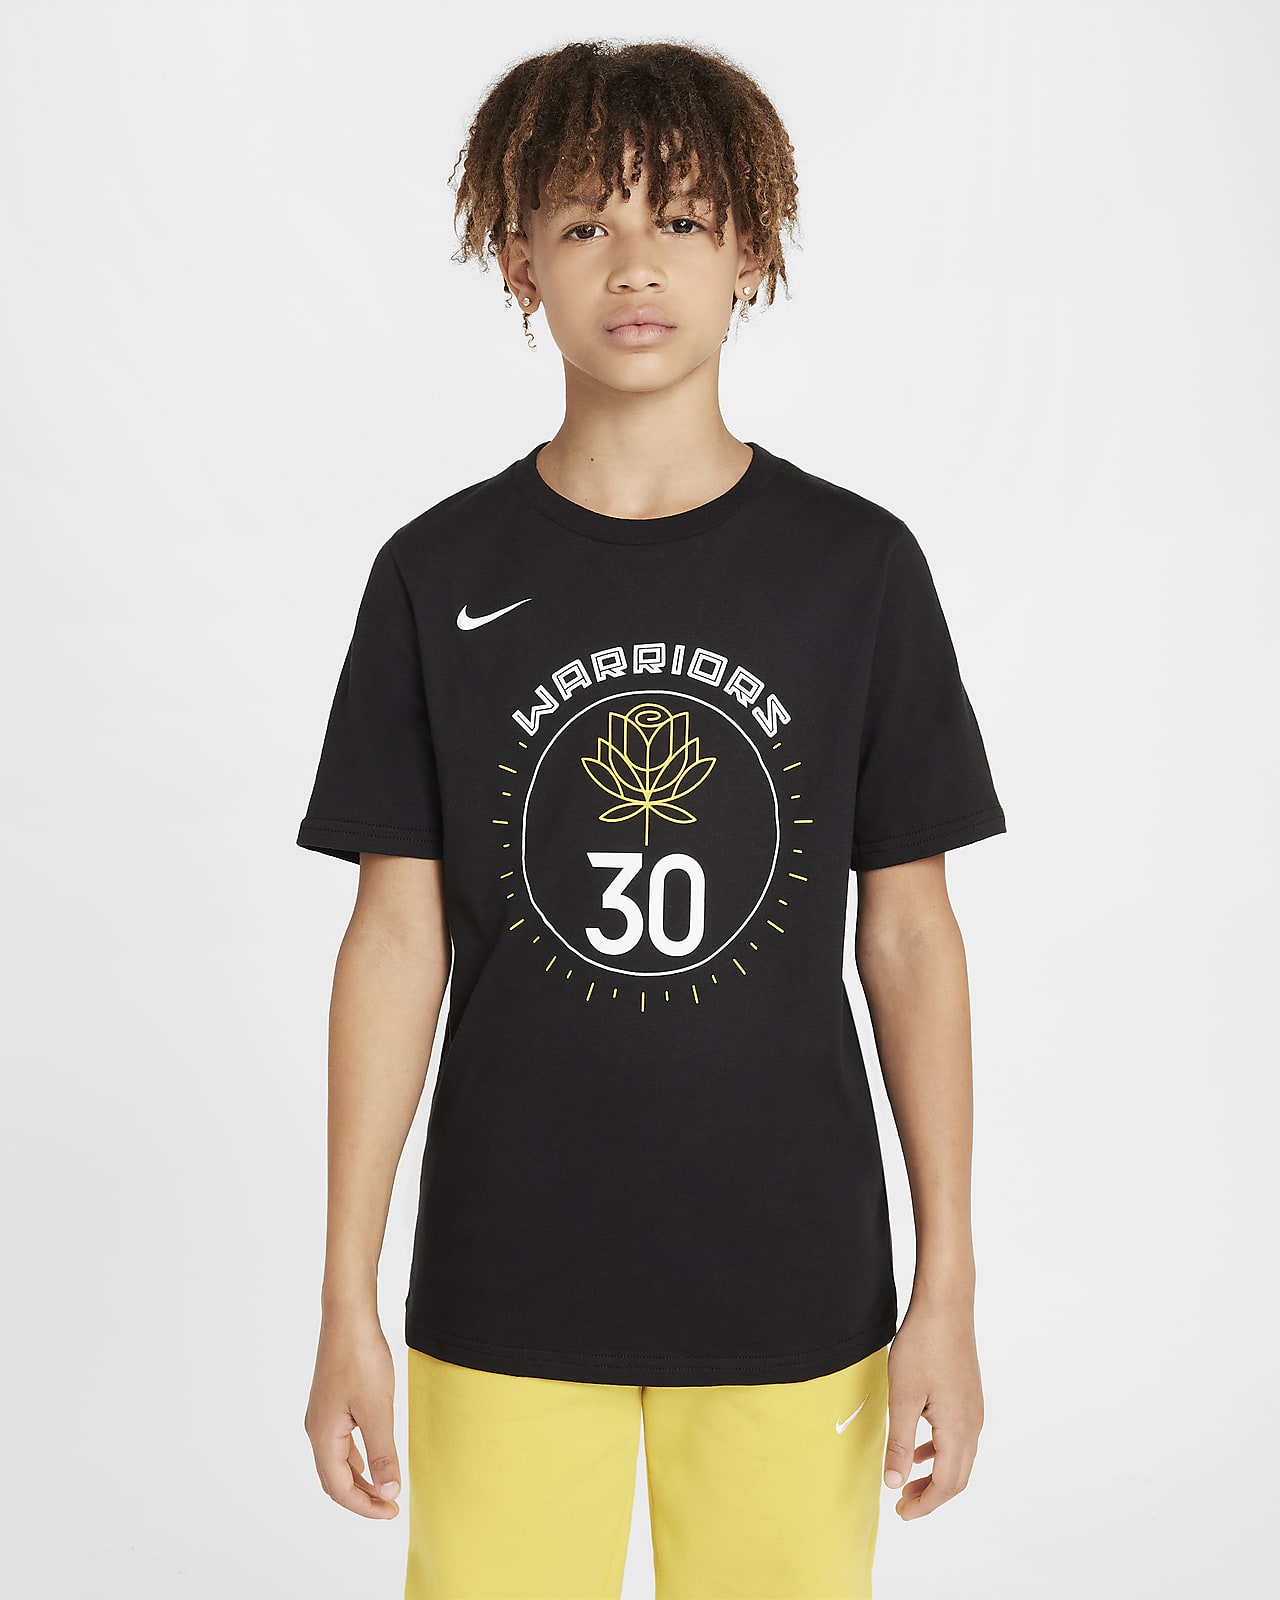 Golden State Warriors City Edition Samarreta Nike NBA - Nen/a